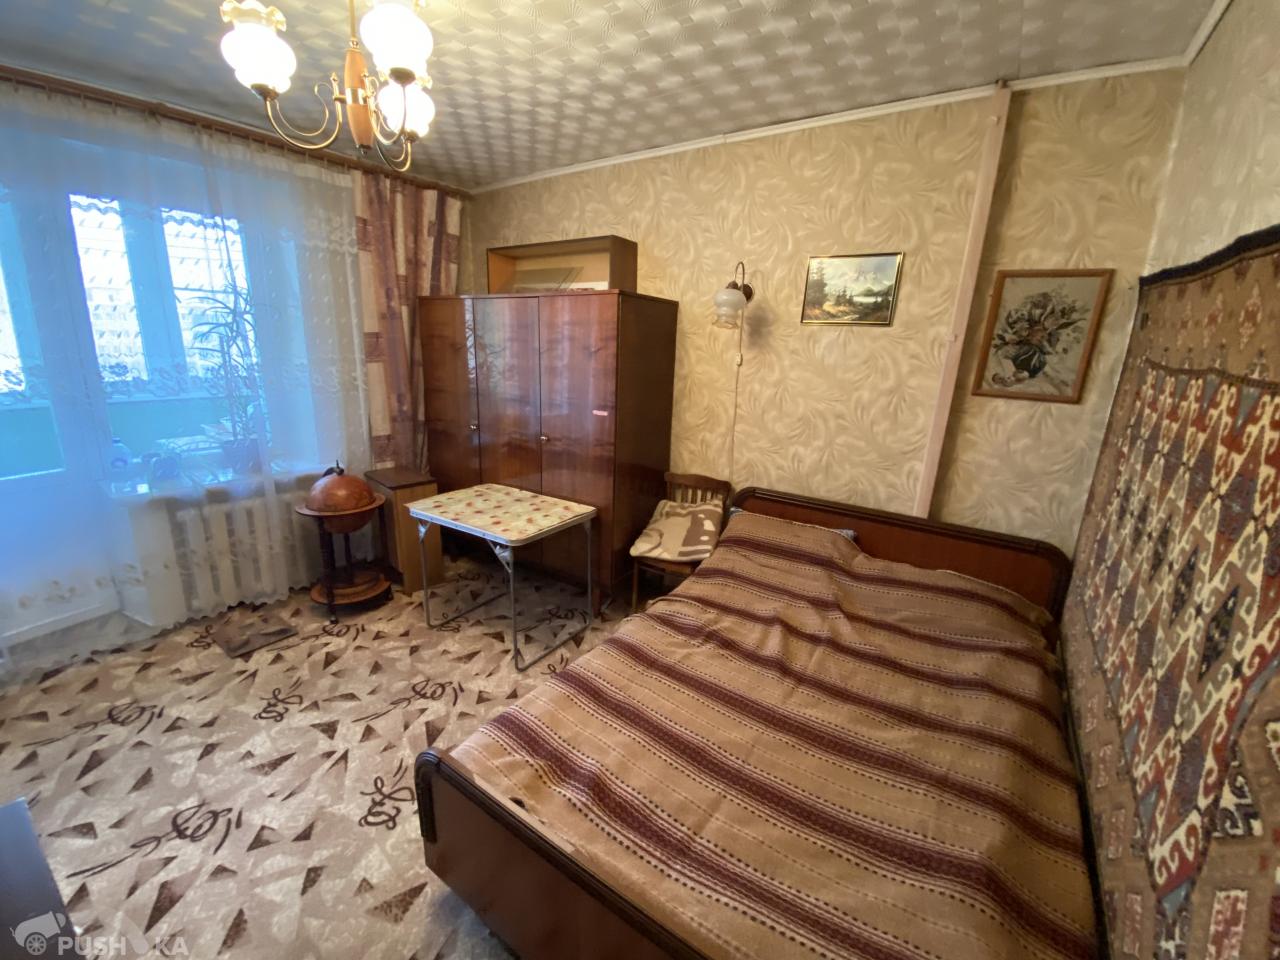 Продаётся 3-комнатная квартира 64.0 кв.м. этаж 8/9 за 10 300 000 руб 